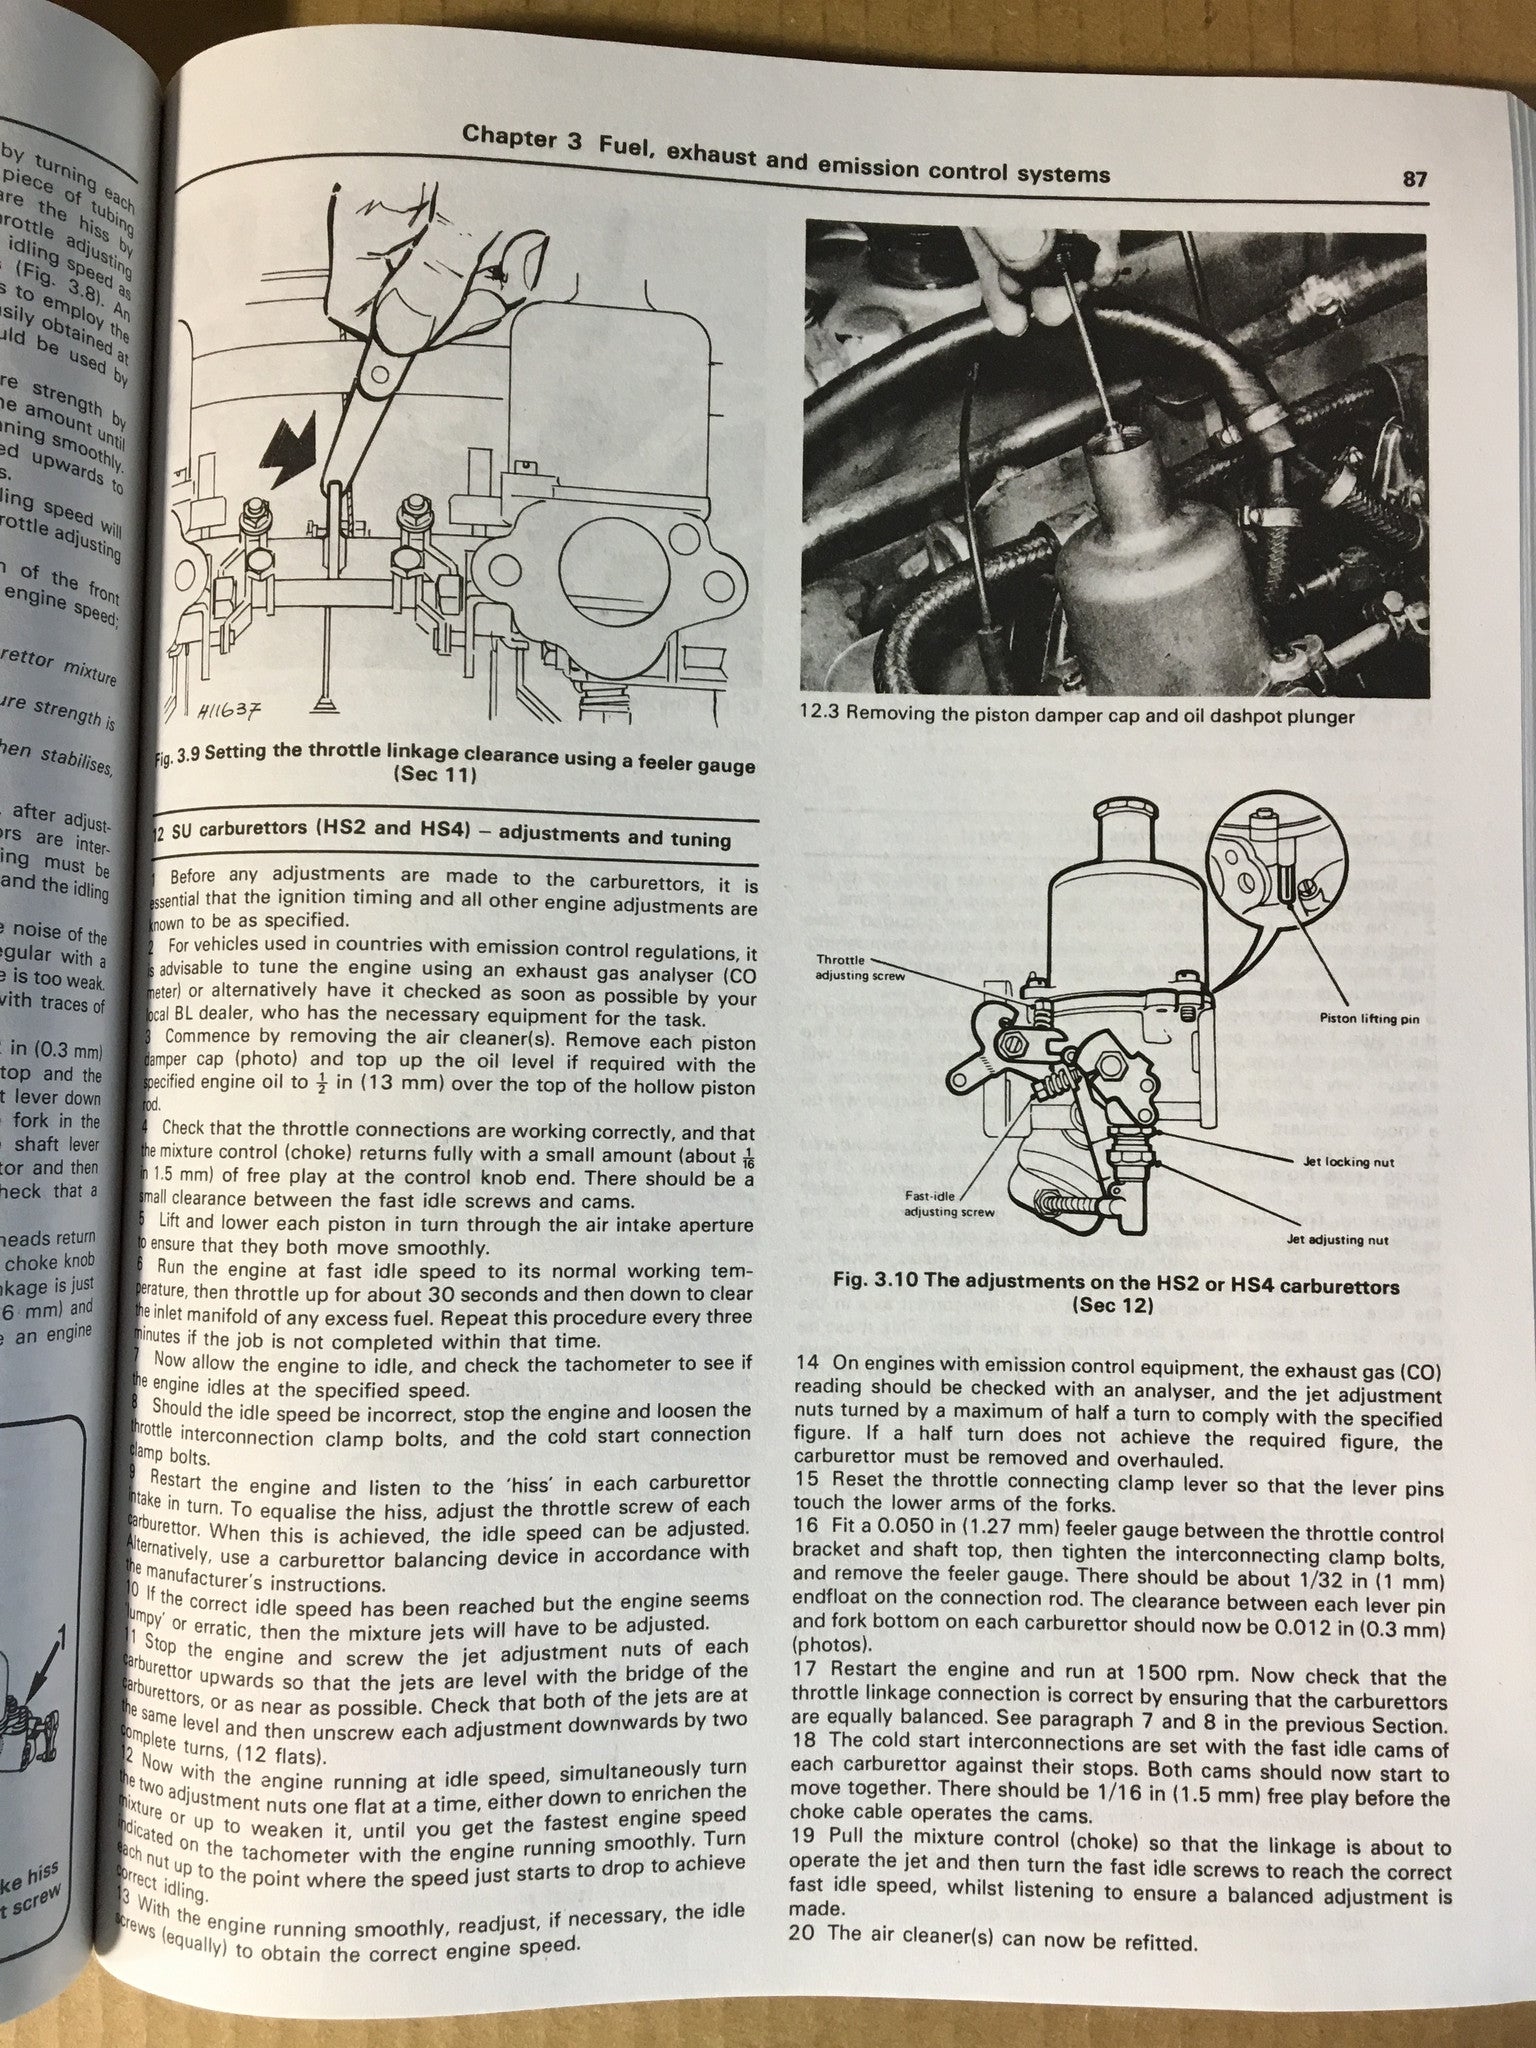 Engine Stop-Start Technology Explained - Haynes Manuals